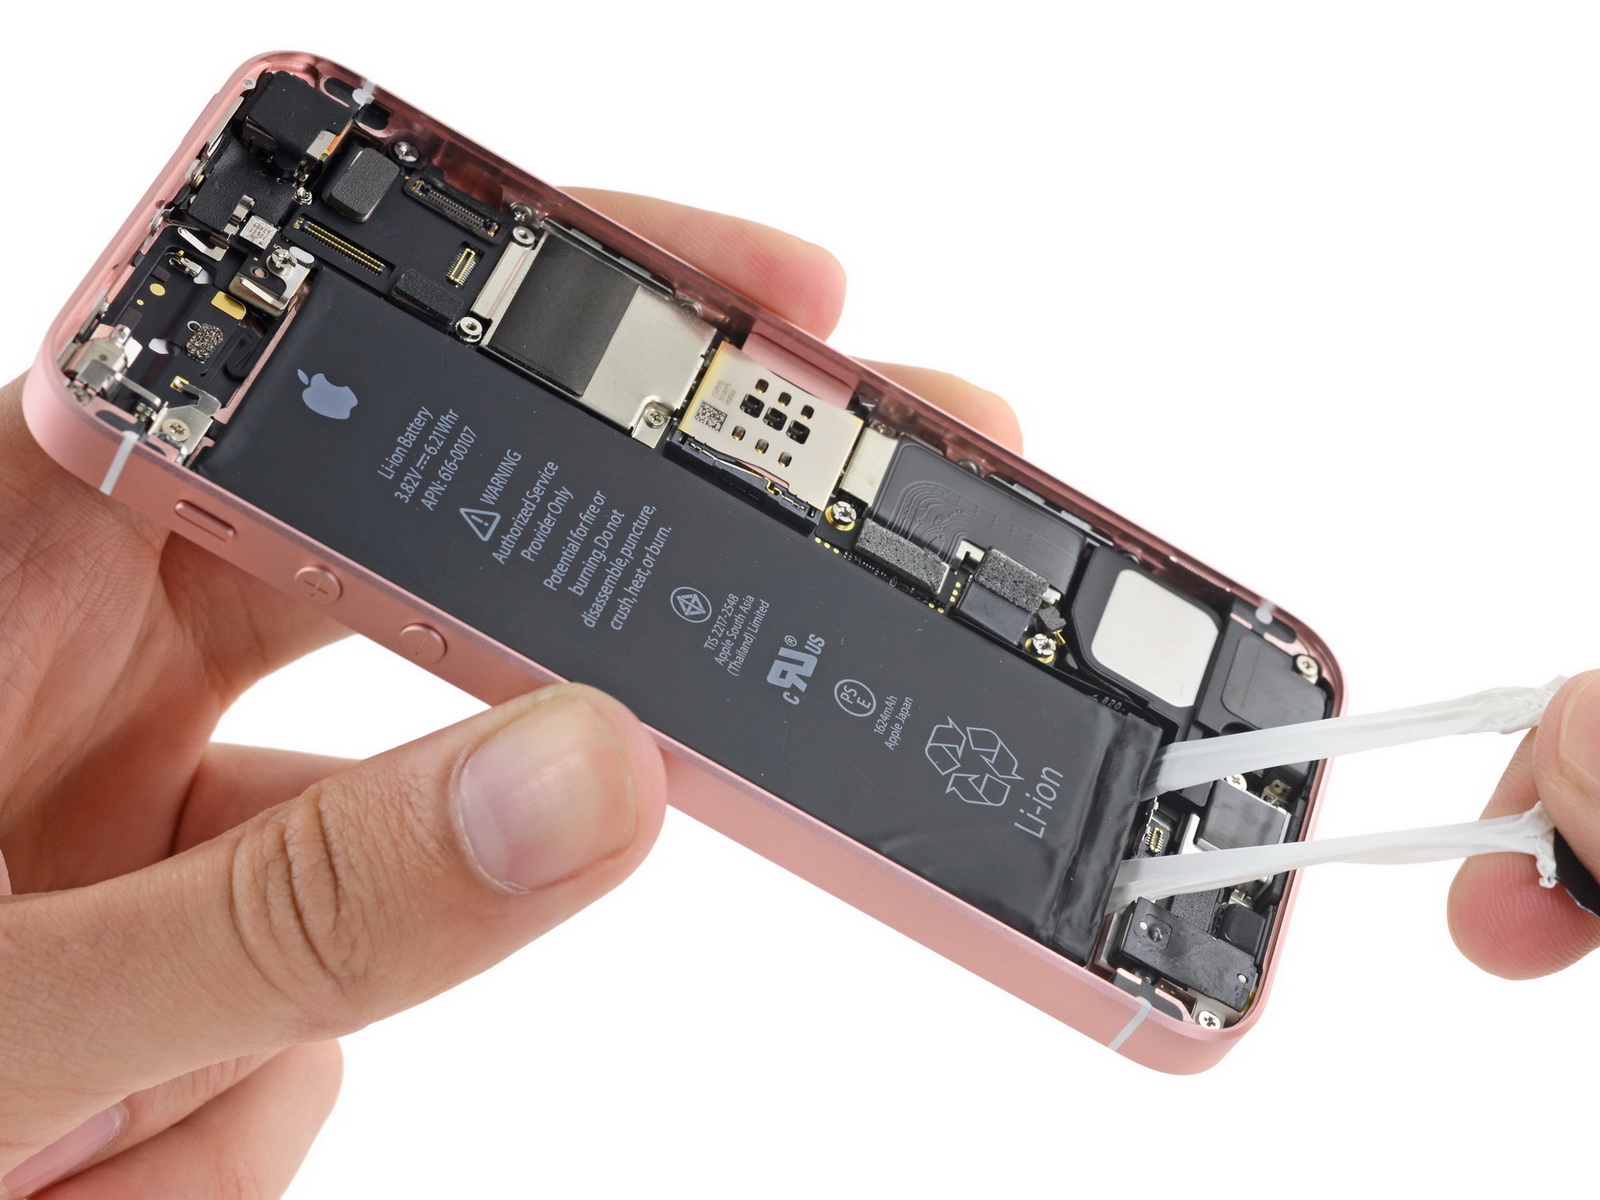 Apple iPhone SE gets iFixit teardown